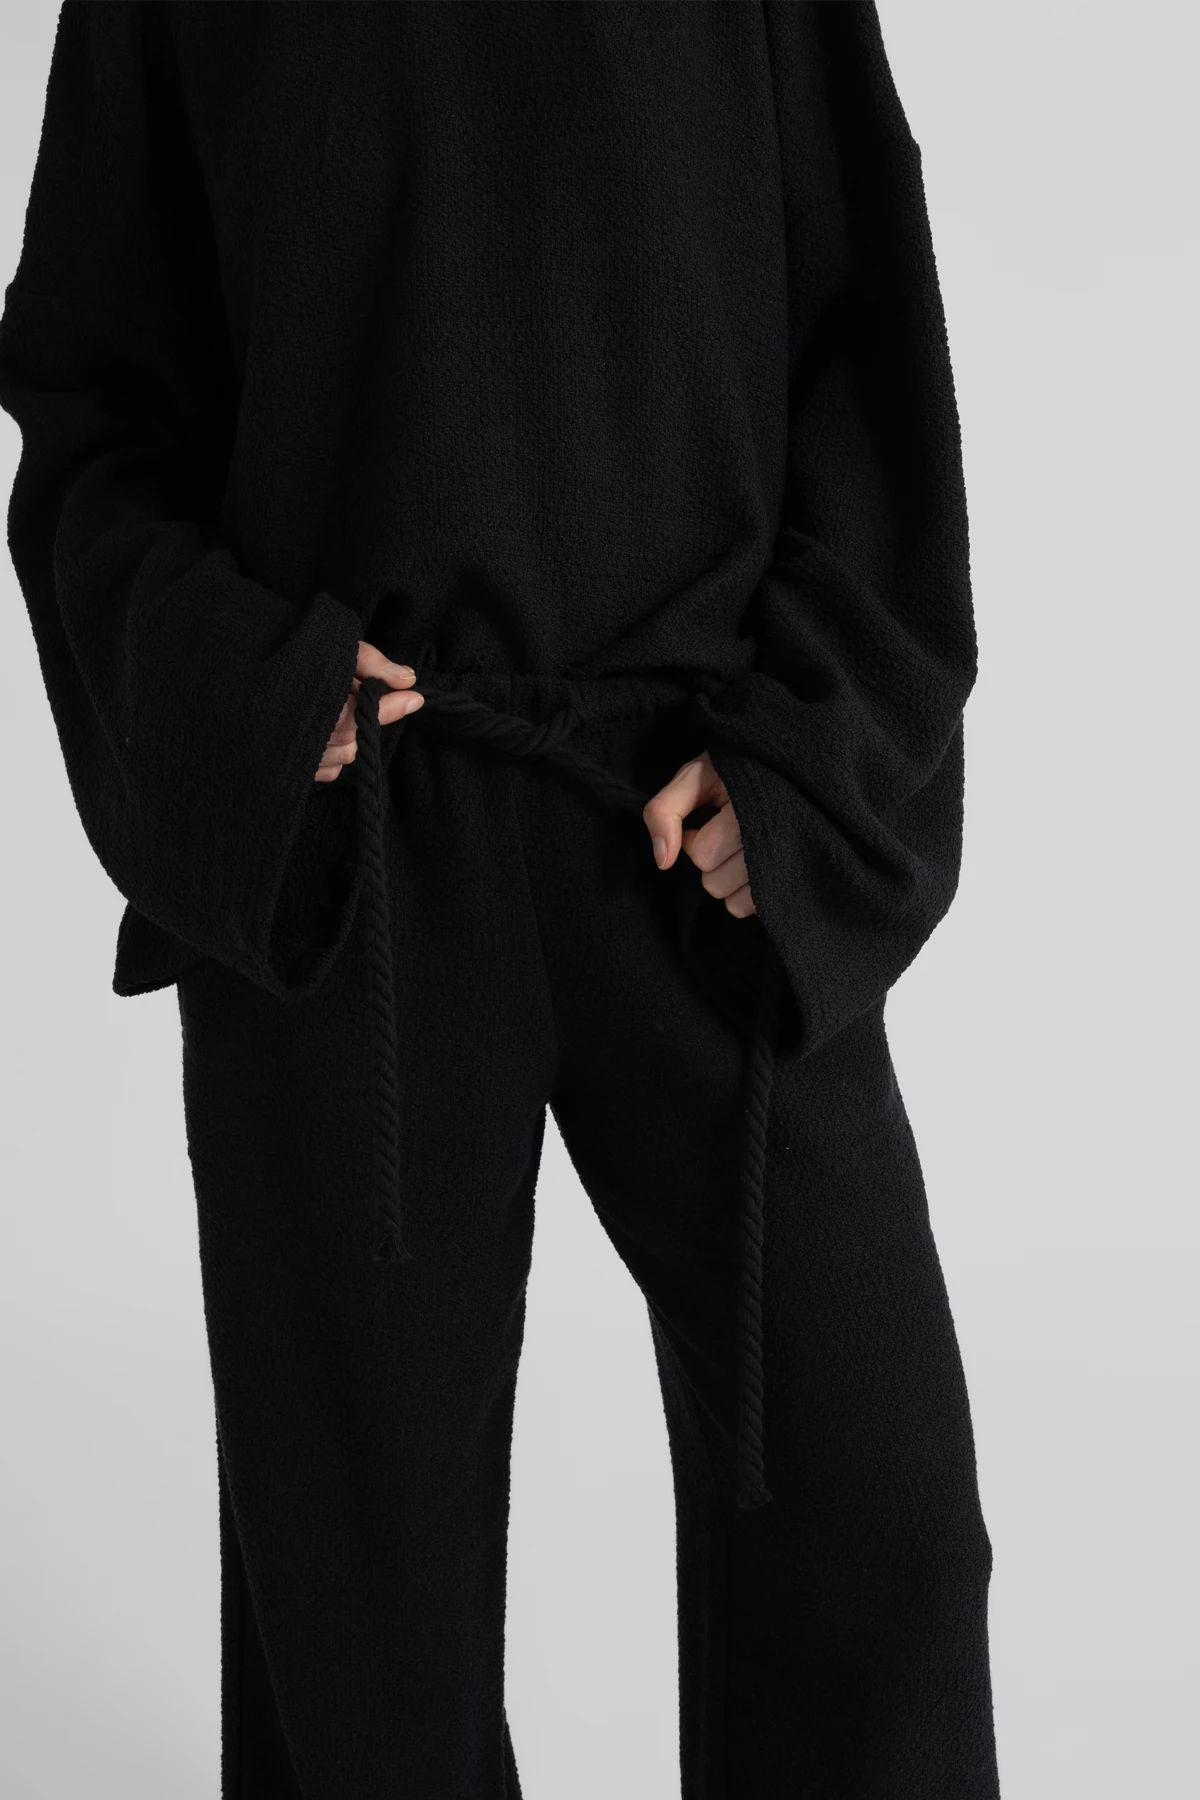 BEPPA Sweater Black